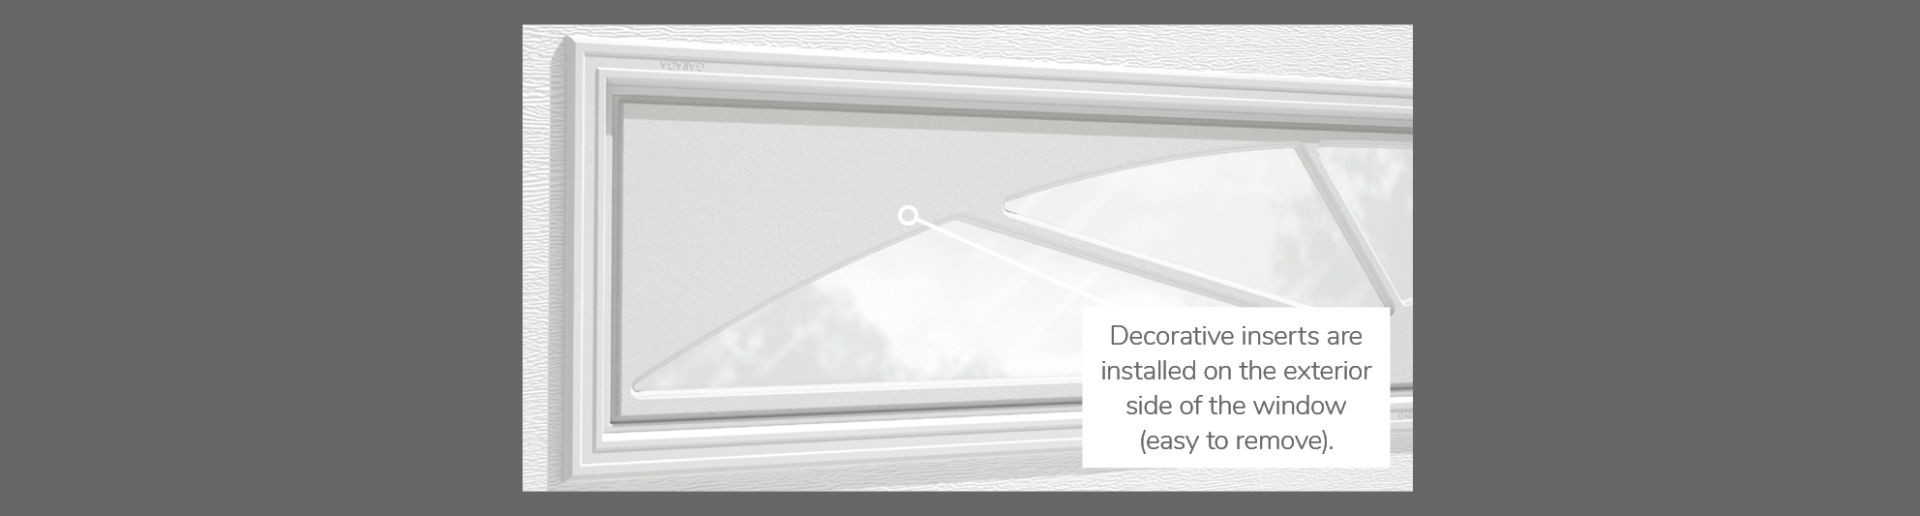 Williamsburg Decorative Insert, 40" x 13", available for door R-16